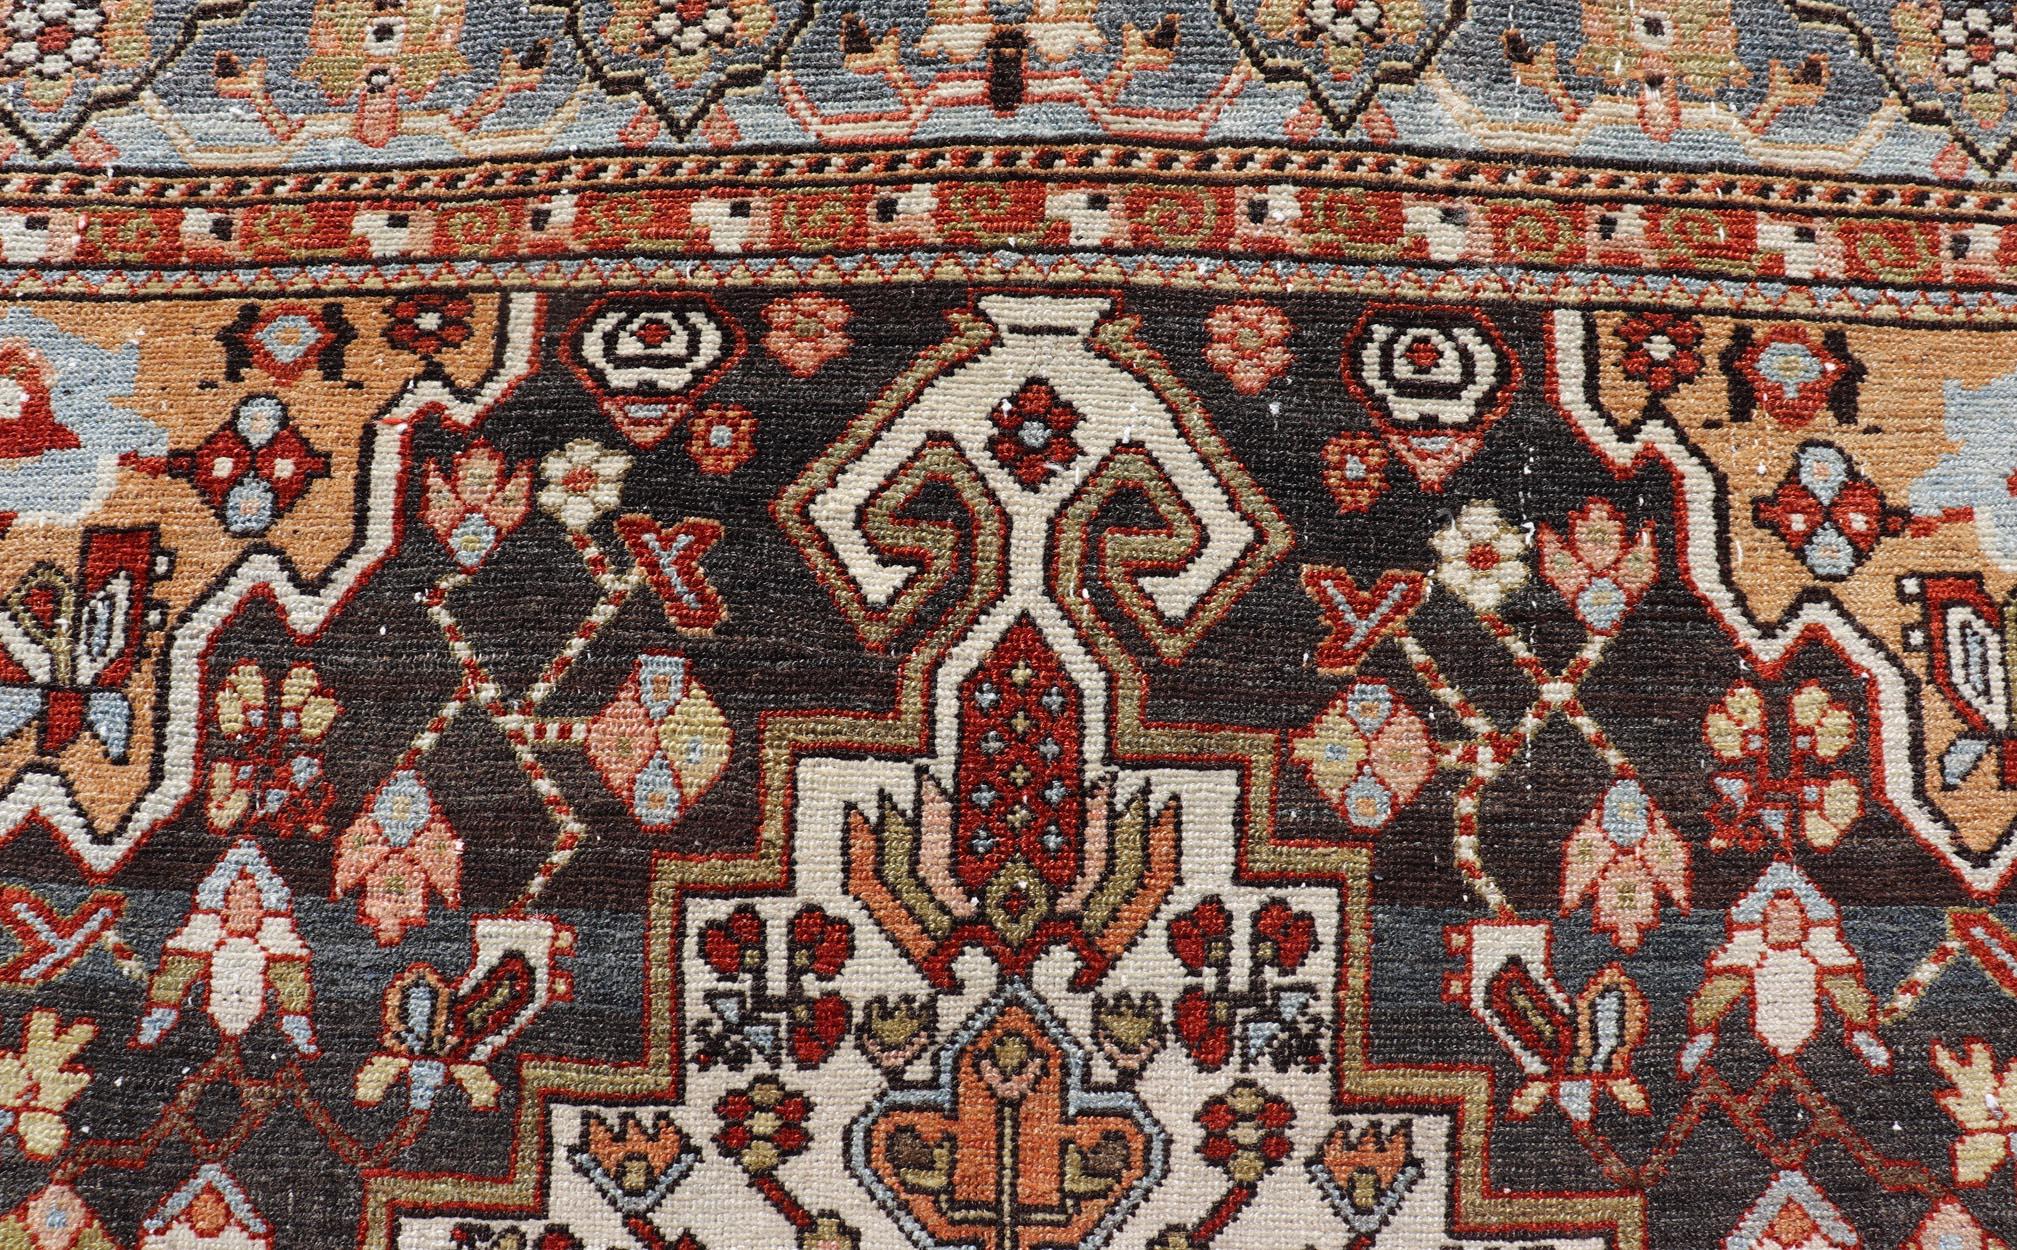 Antique Persian Tribal Design Bakhtiari Rug in Multi Colors By Keivan Woven Arts For Sale 3